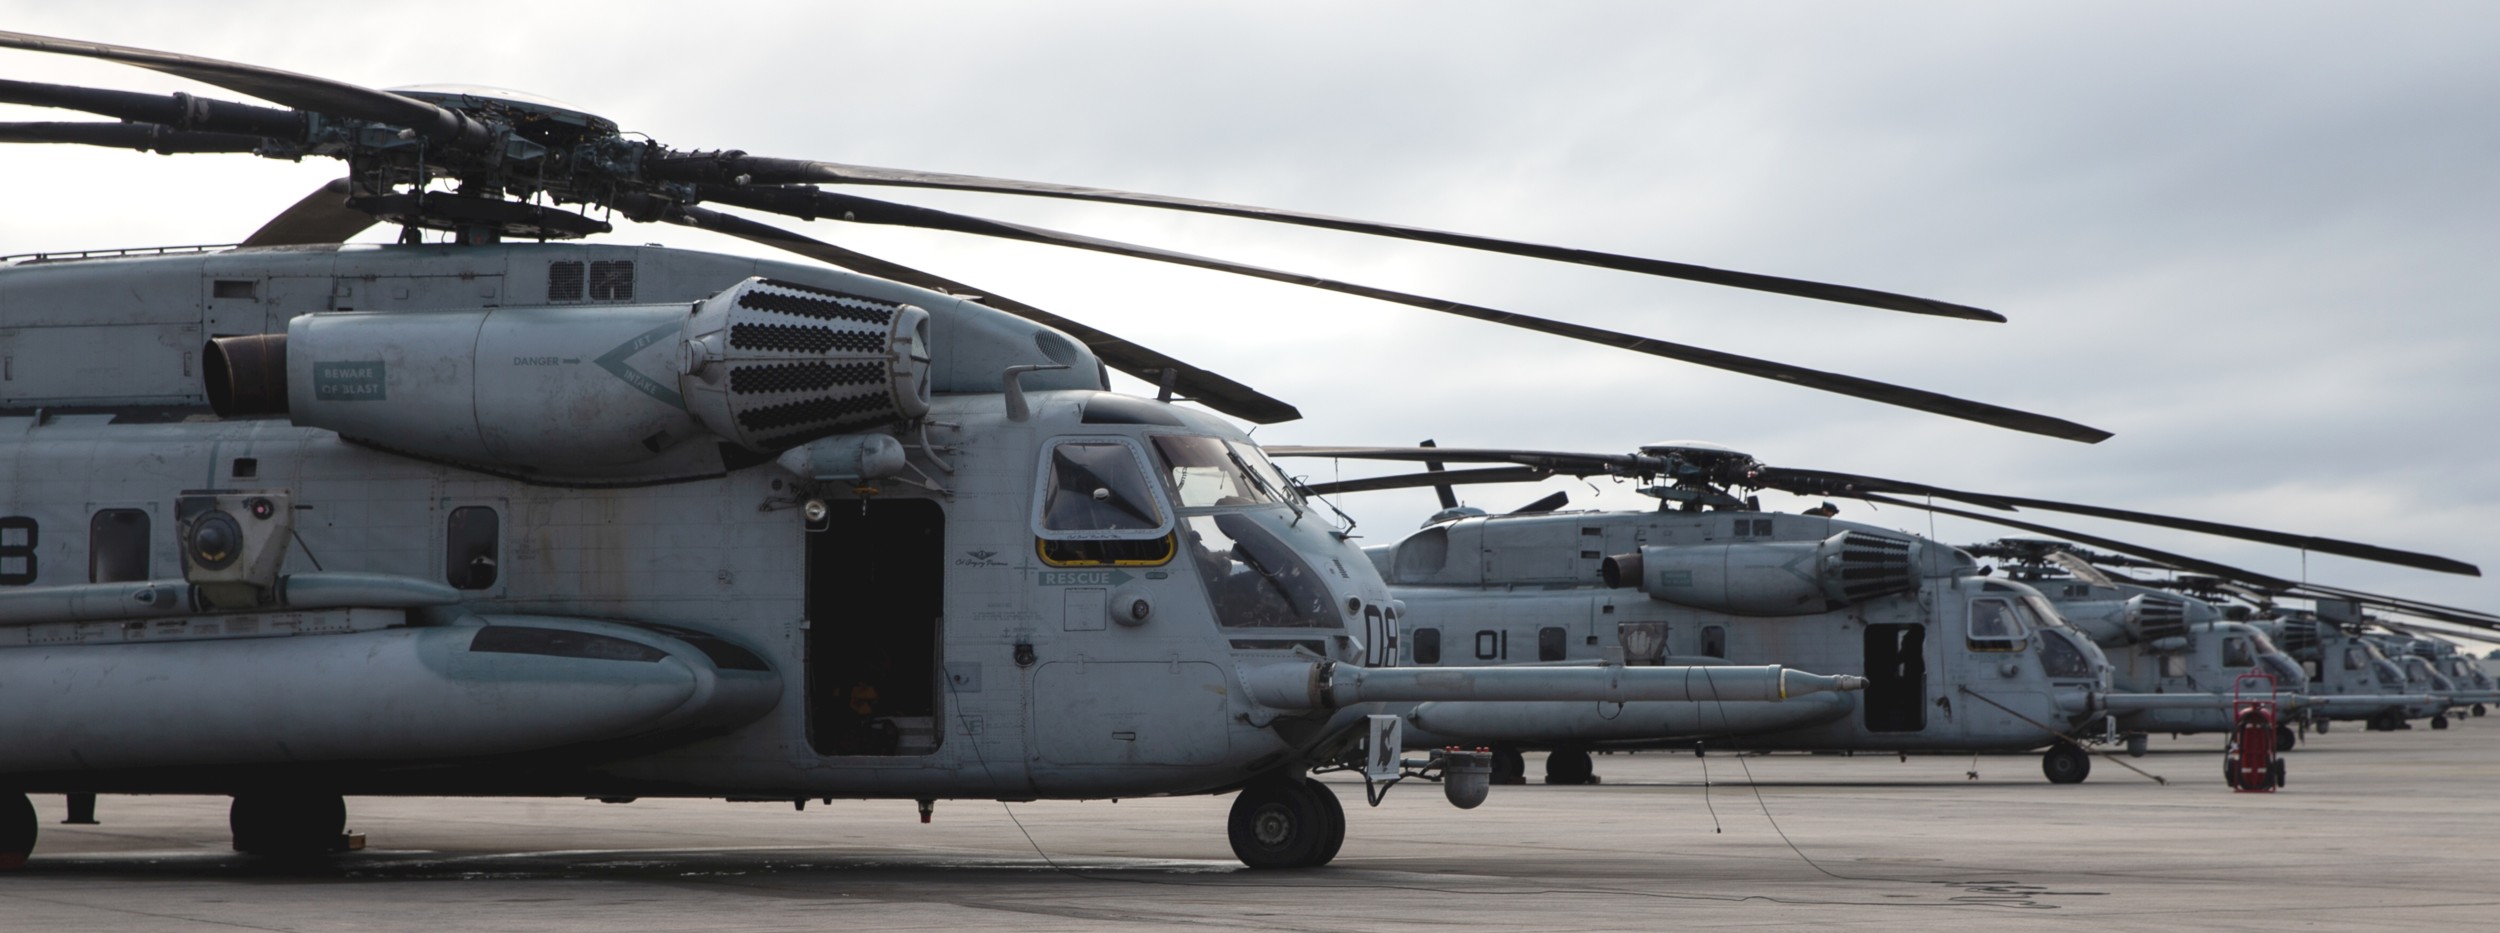 hmh-366 hammerheads marine heavy helicopter squadron usmc sikorsky ch-53e super stallion 98